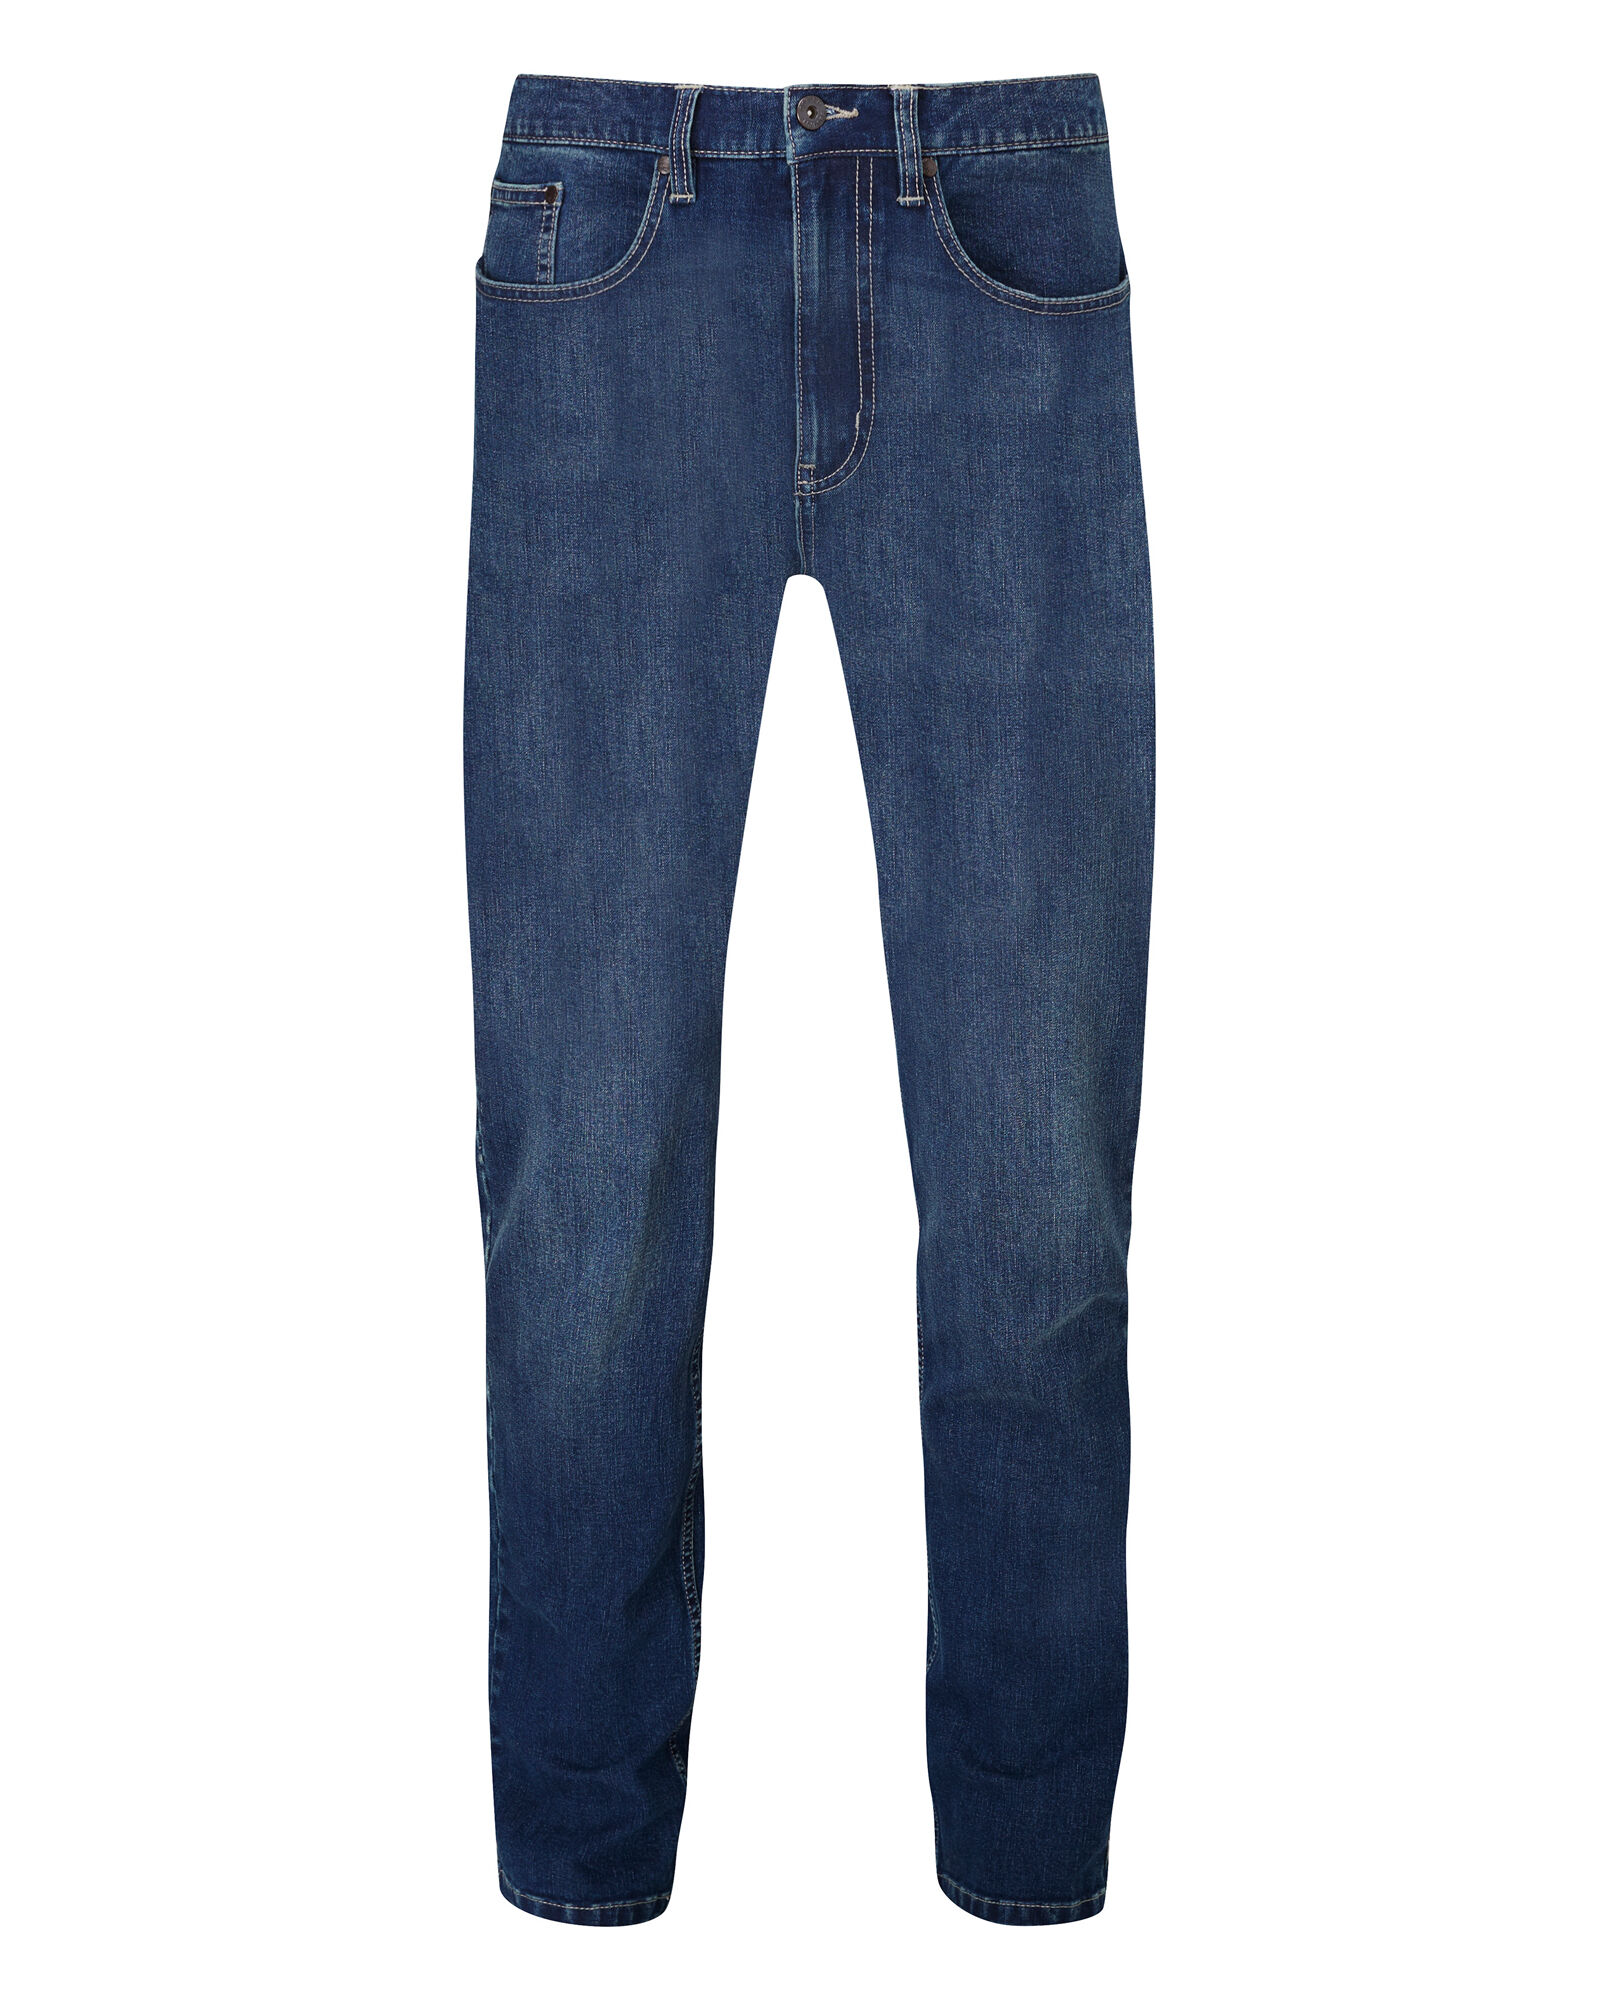 discount 73% Blue XXL MEN FASHION Jeans Worn-in M&H shorts jeans 